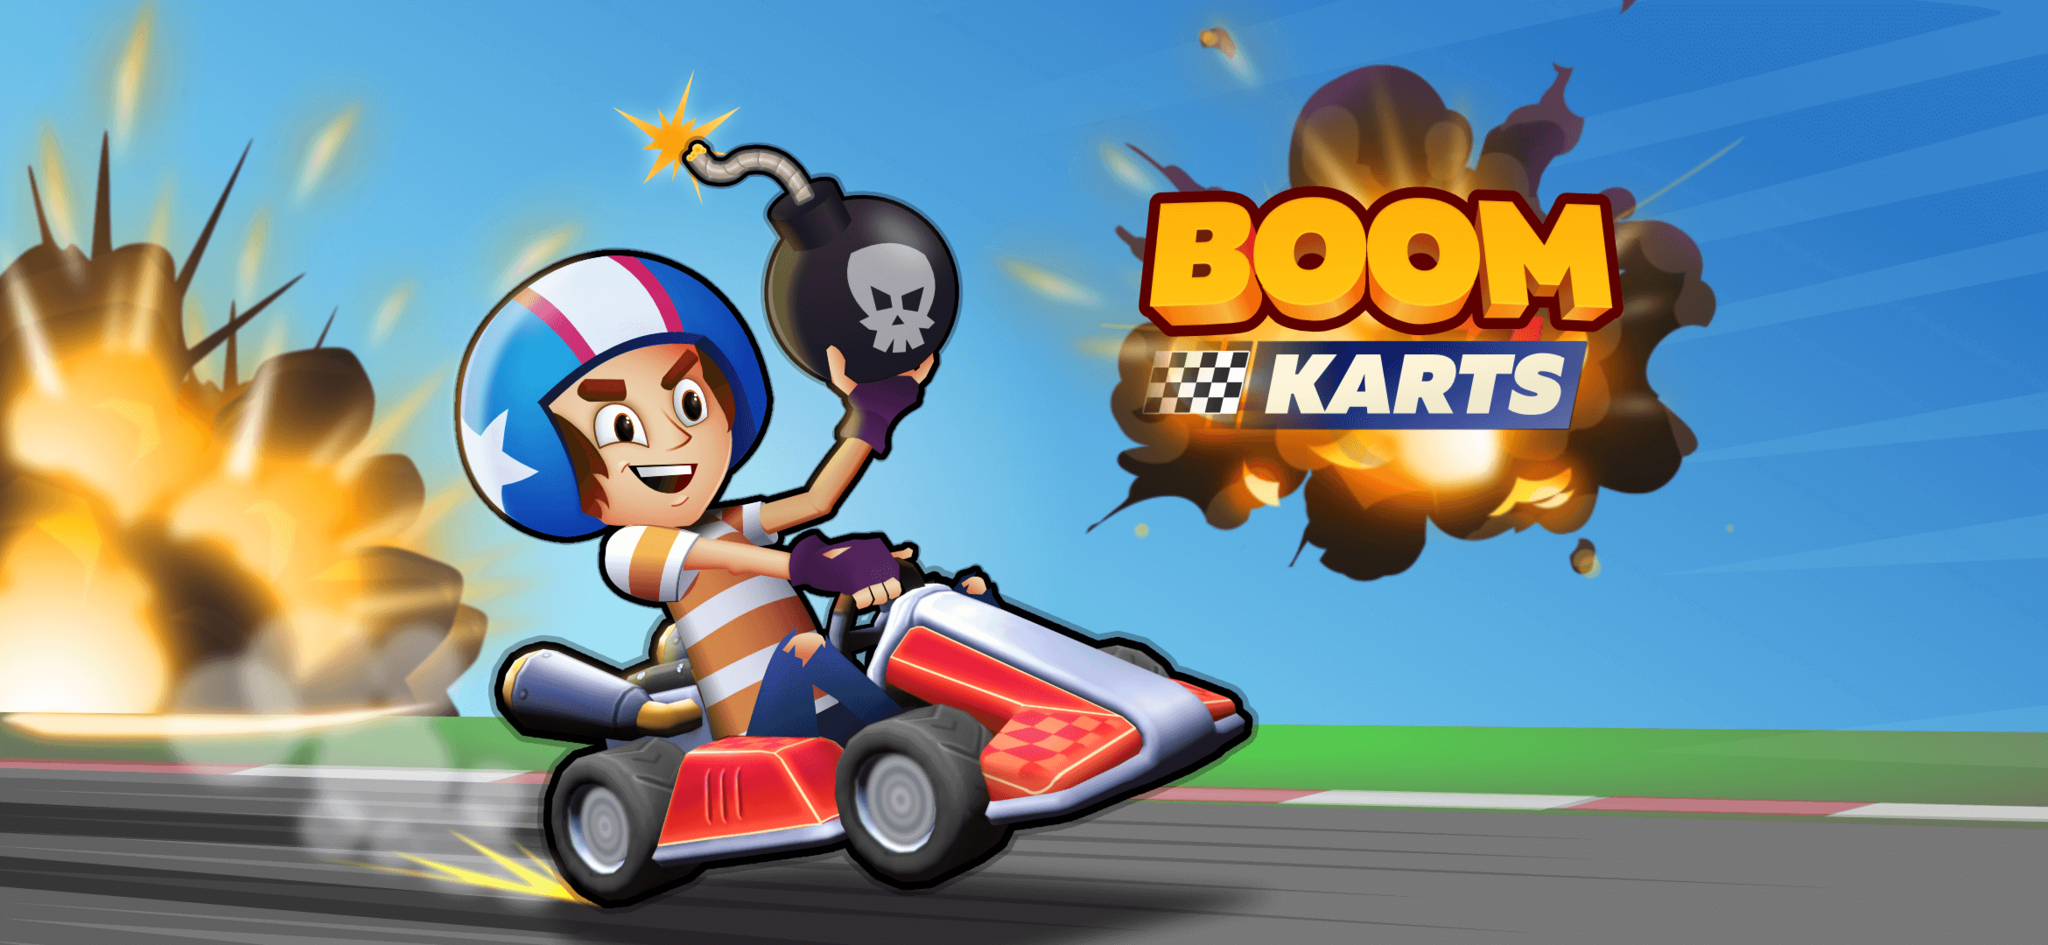 Boom Karts - Splash Screen (0.47)